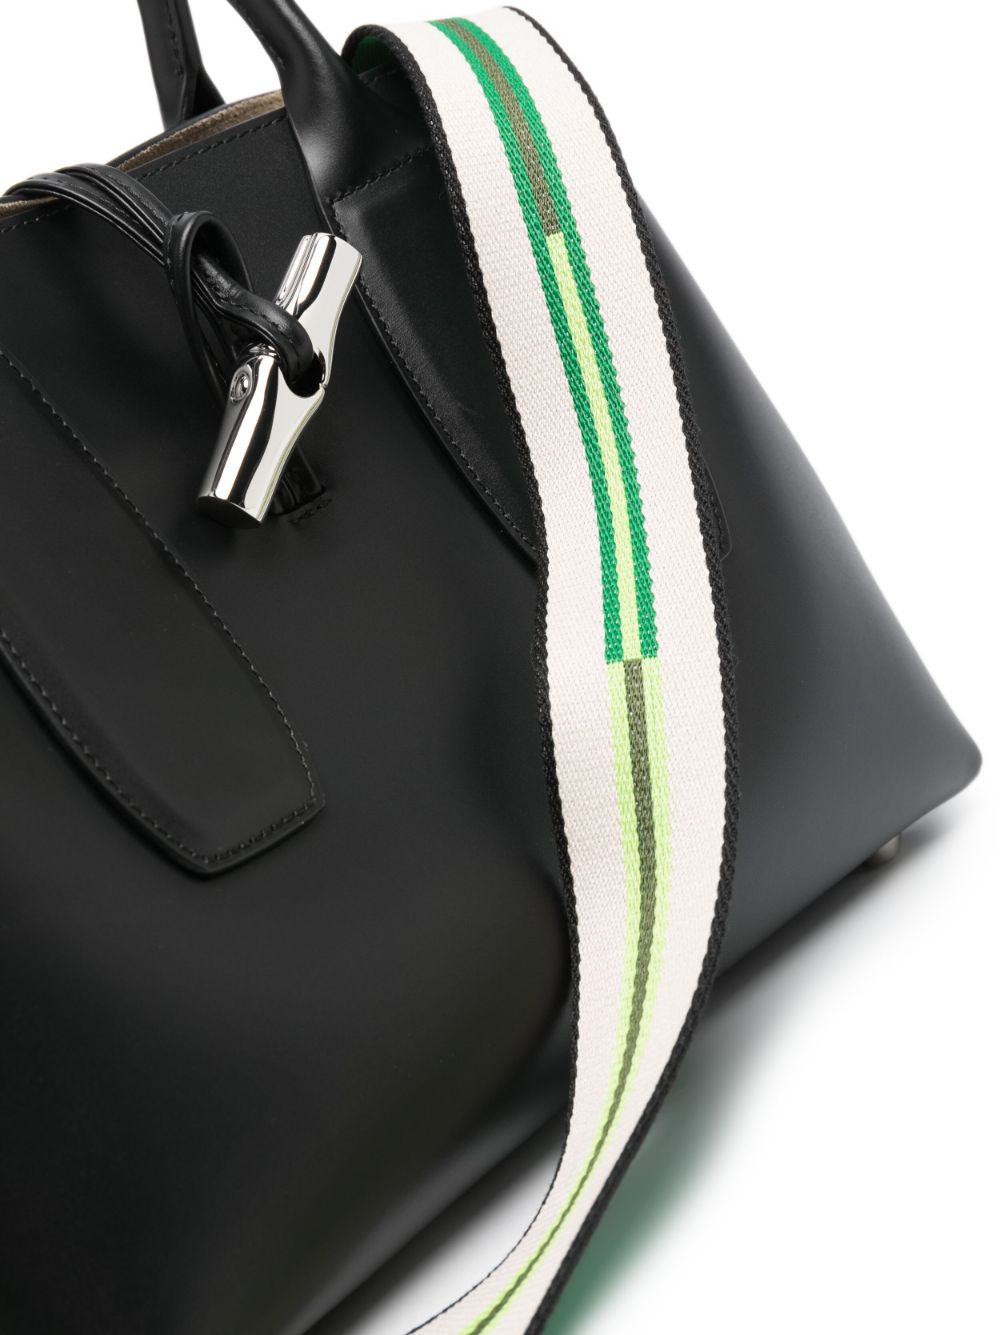 Longchamp Medium Roseau Leather Tote Bag - Farfetch